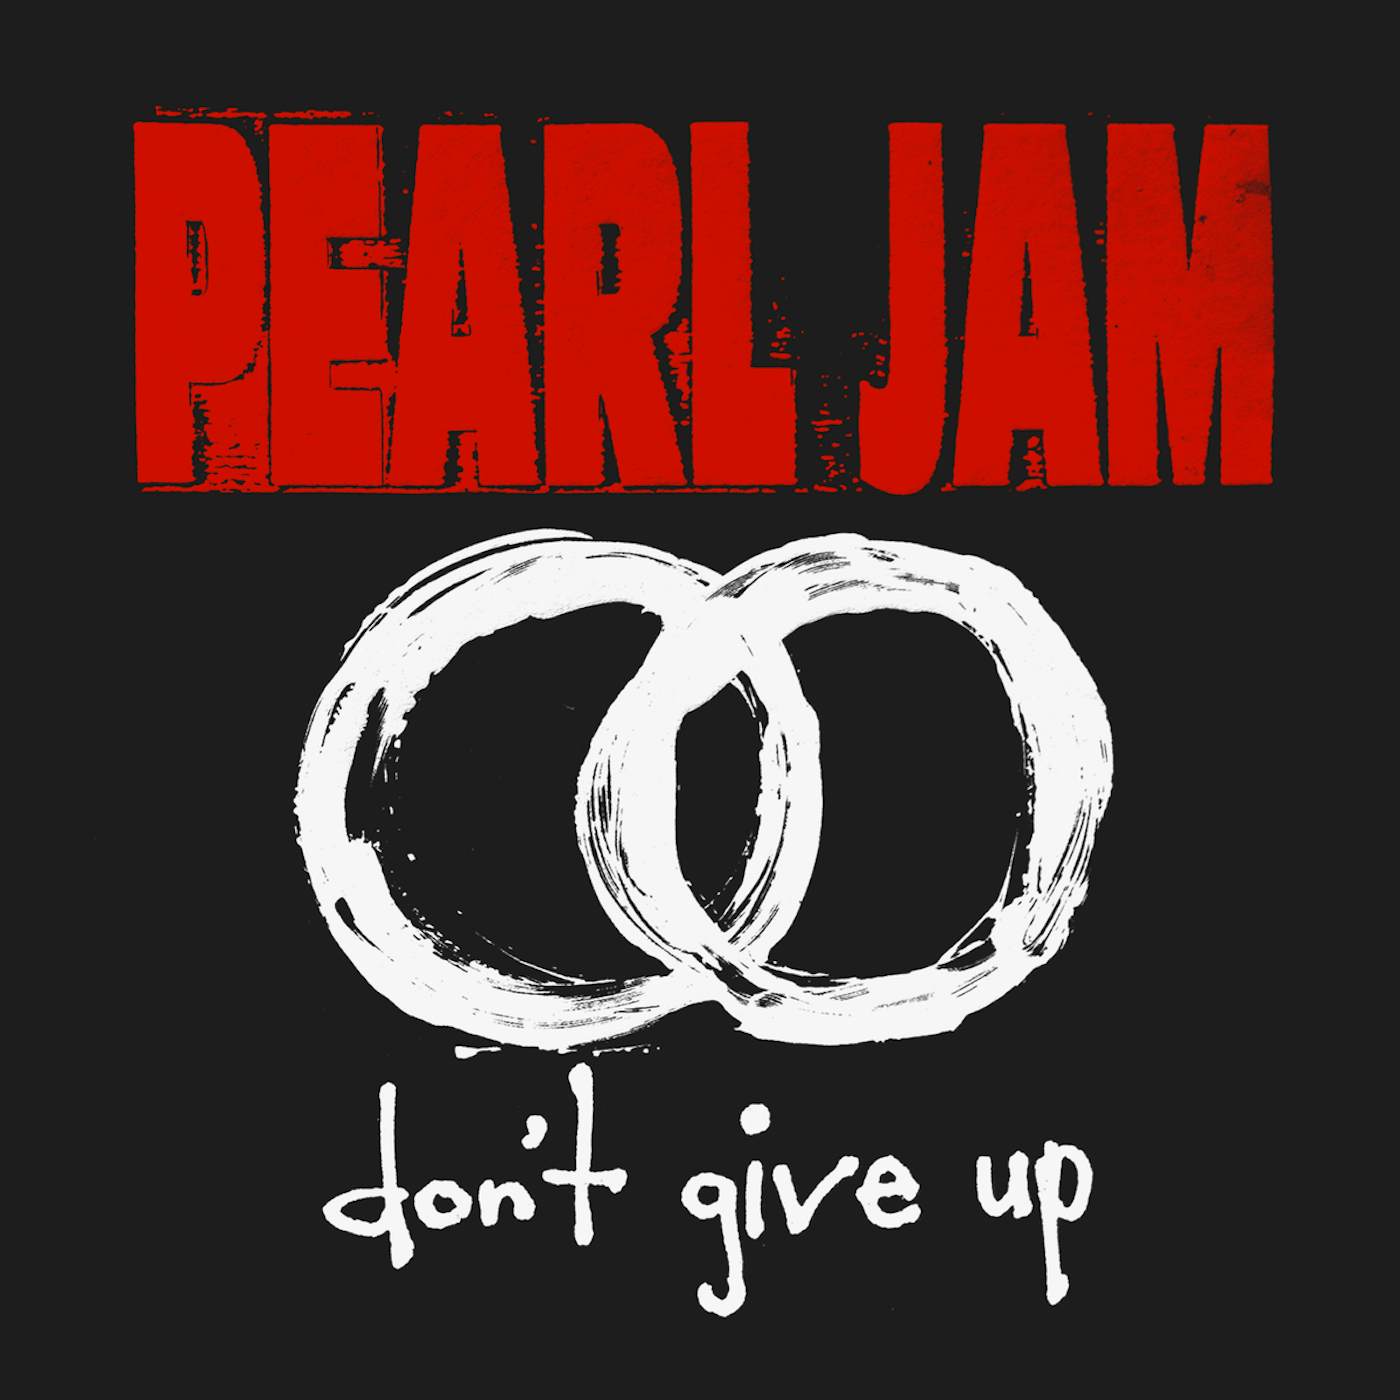 Pearl Jam T-Shirt | Don’t Give Up Overlapping Circles Band Logo Pearl Jam Shirt